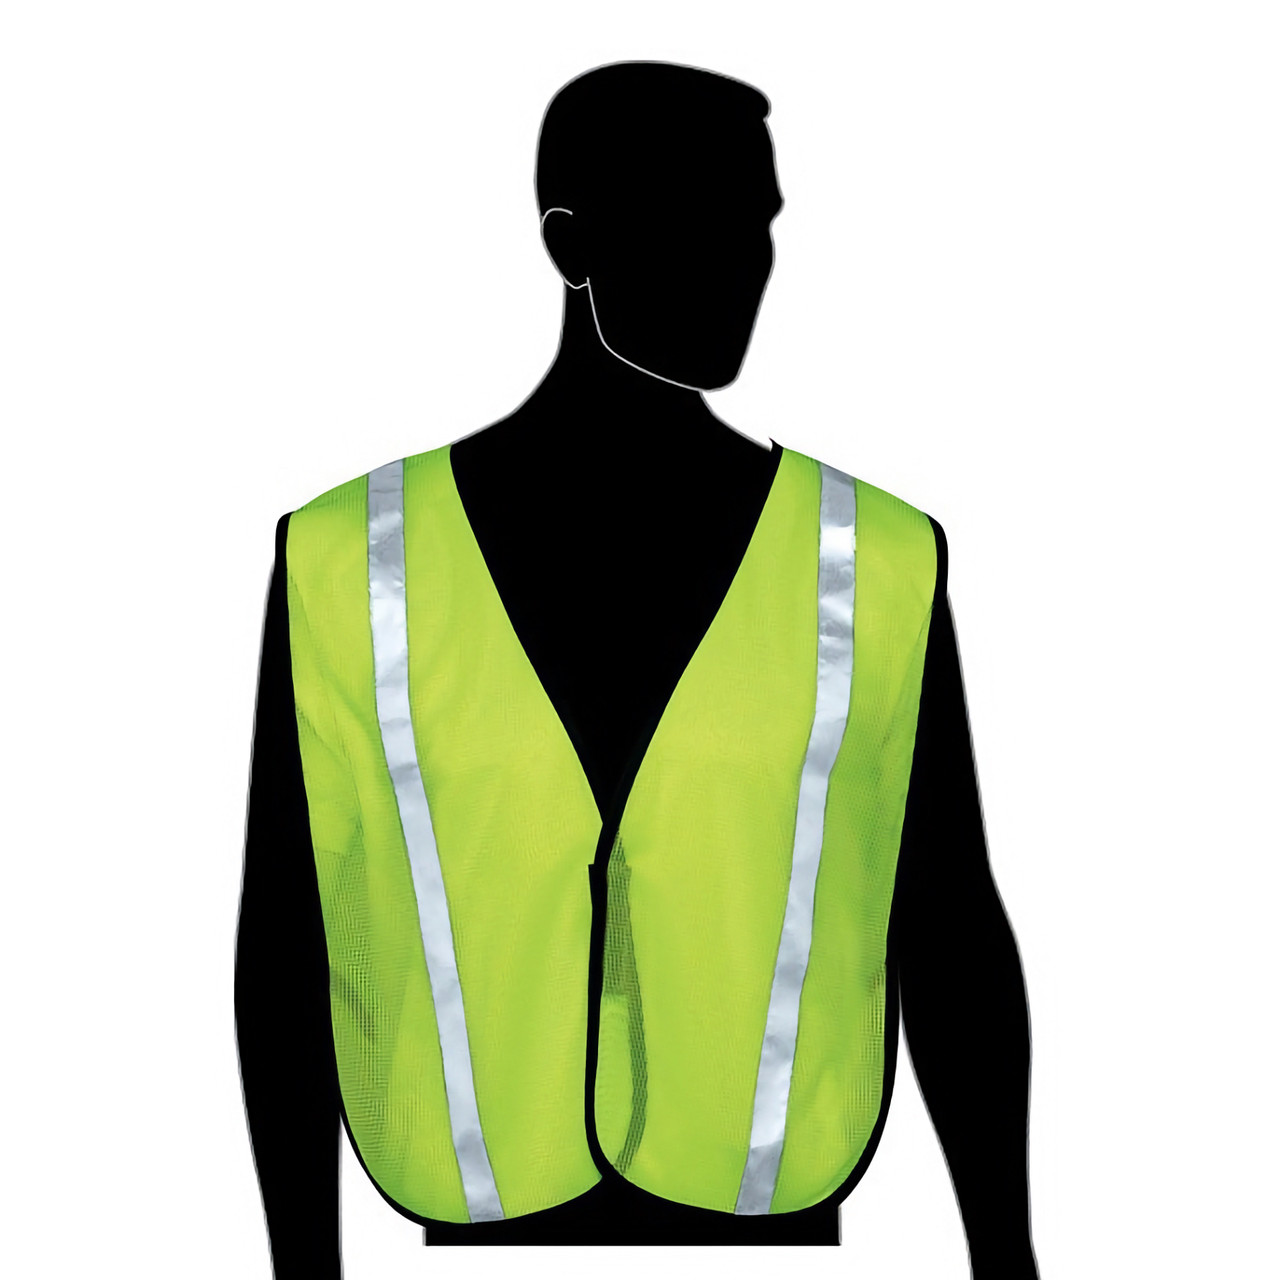 HiVizGard N16001G High Visibility Mesh Safety Vest, OSFA